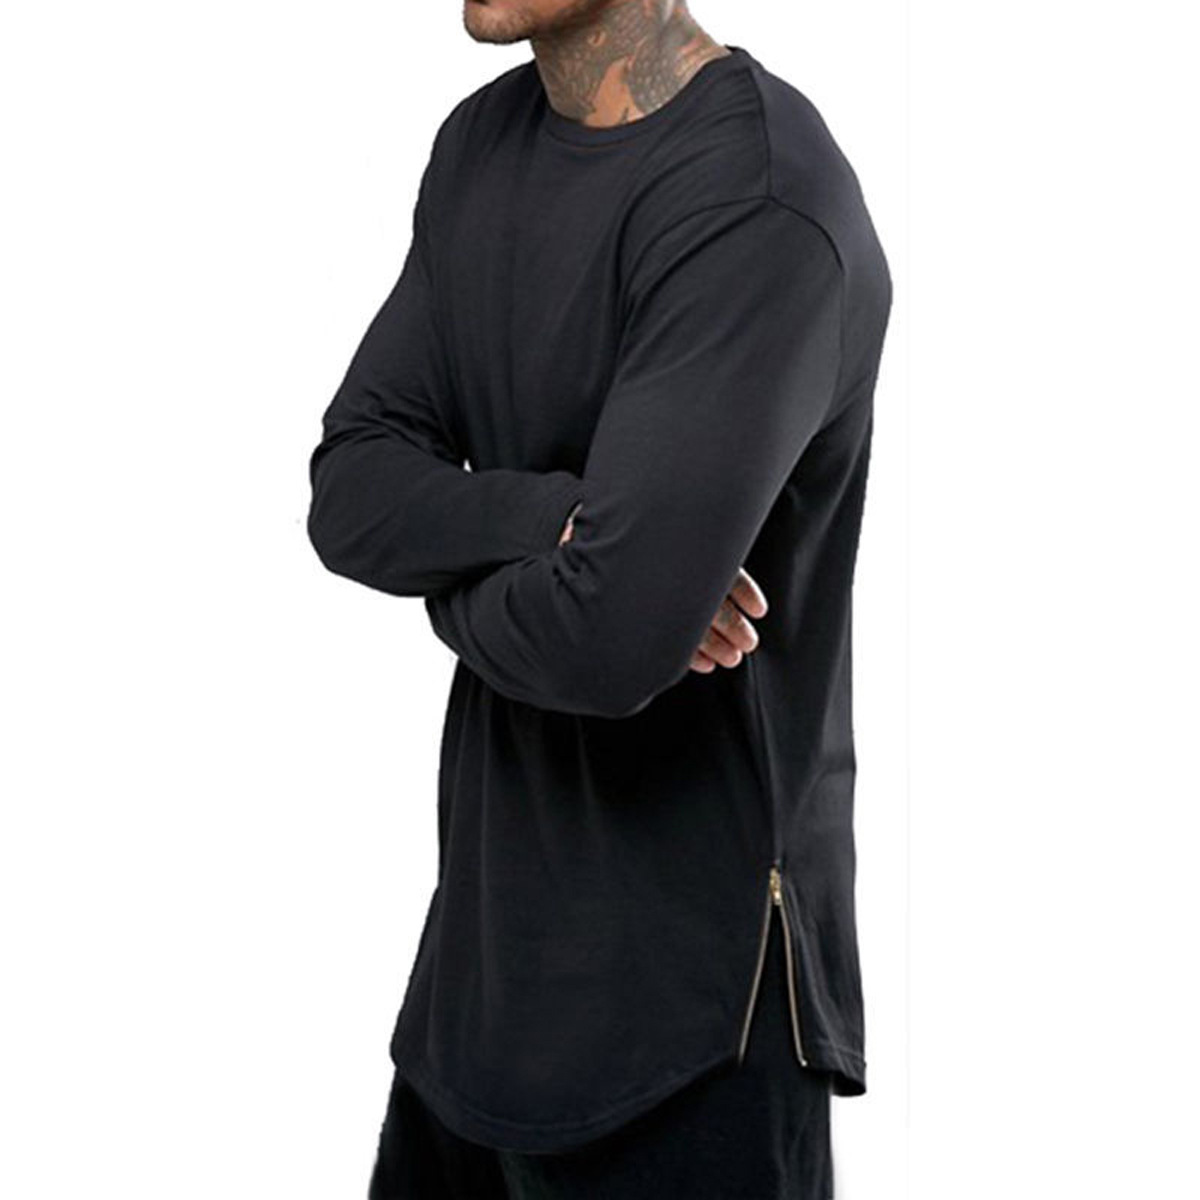 

Longline Men's T-Shirt: Hip Hop Style with Arc Hem & Side Zip - Super Long Sleeve & Baggy Fit, White tee 2